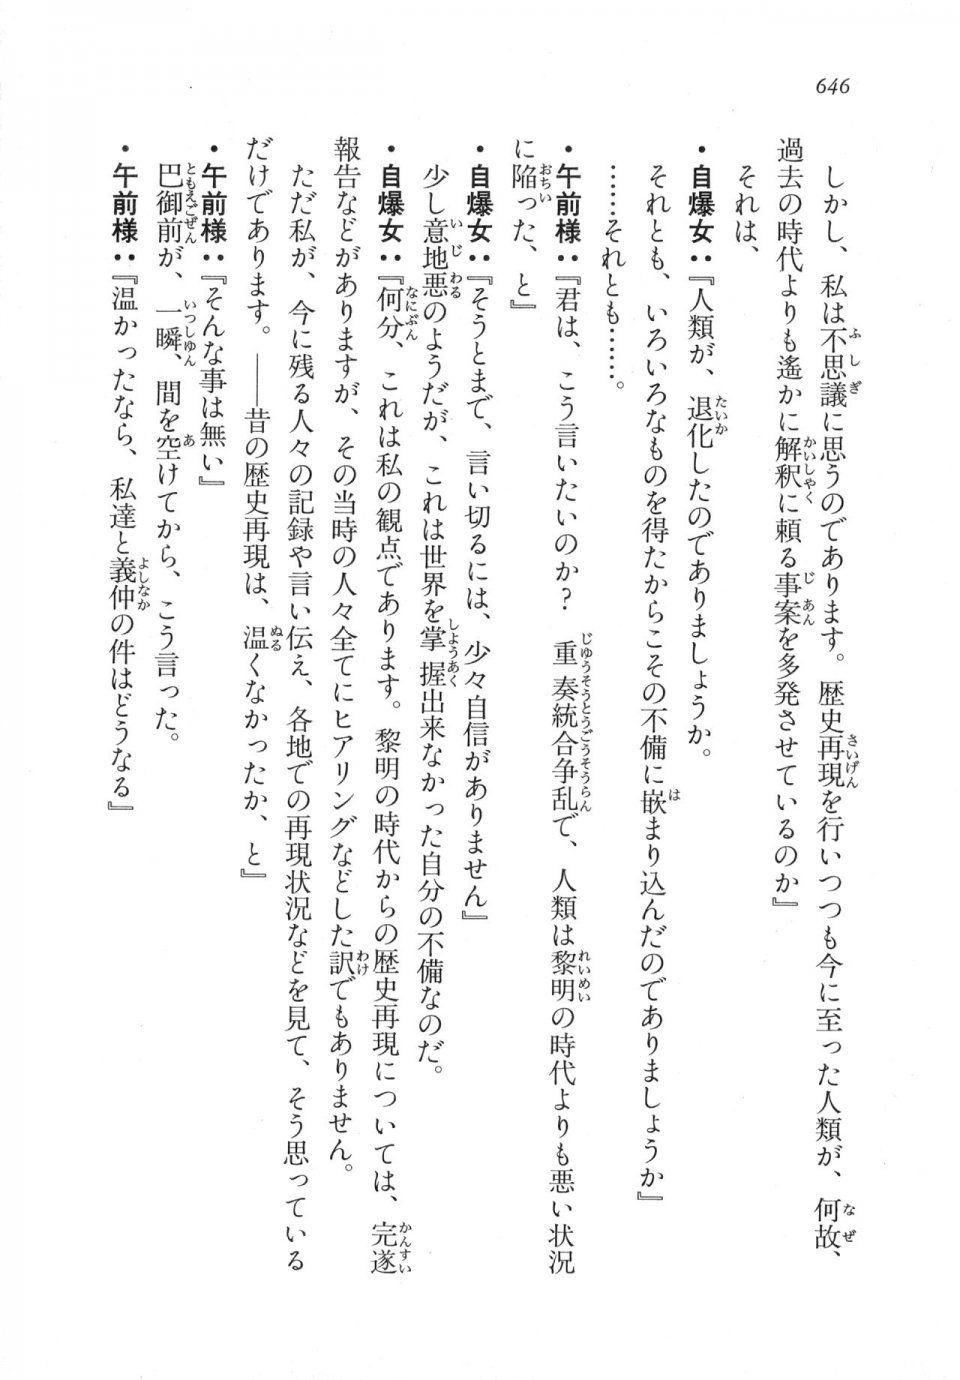 Kyoukai Senjou no Horizon LN Vol 18(7C) Part 2 - Photo #86